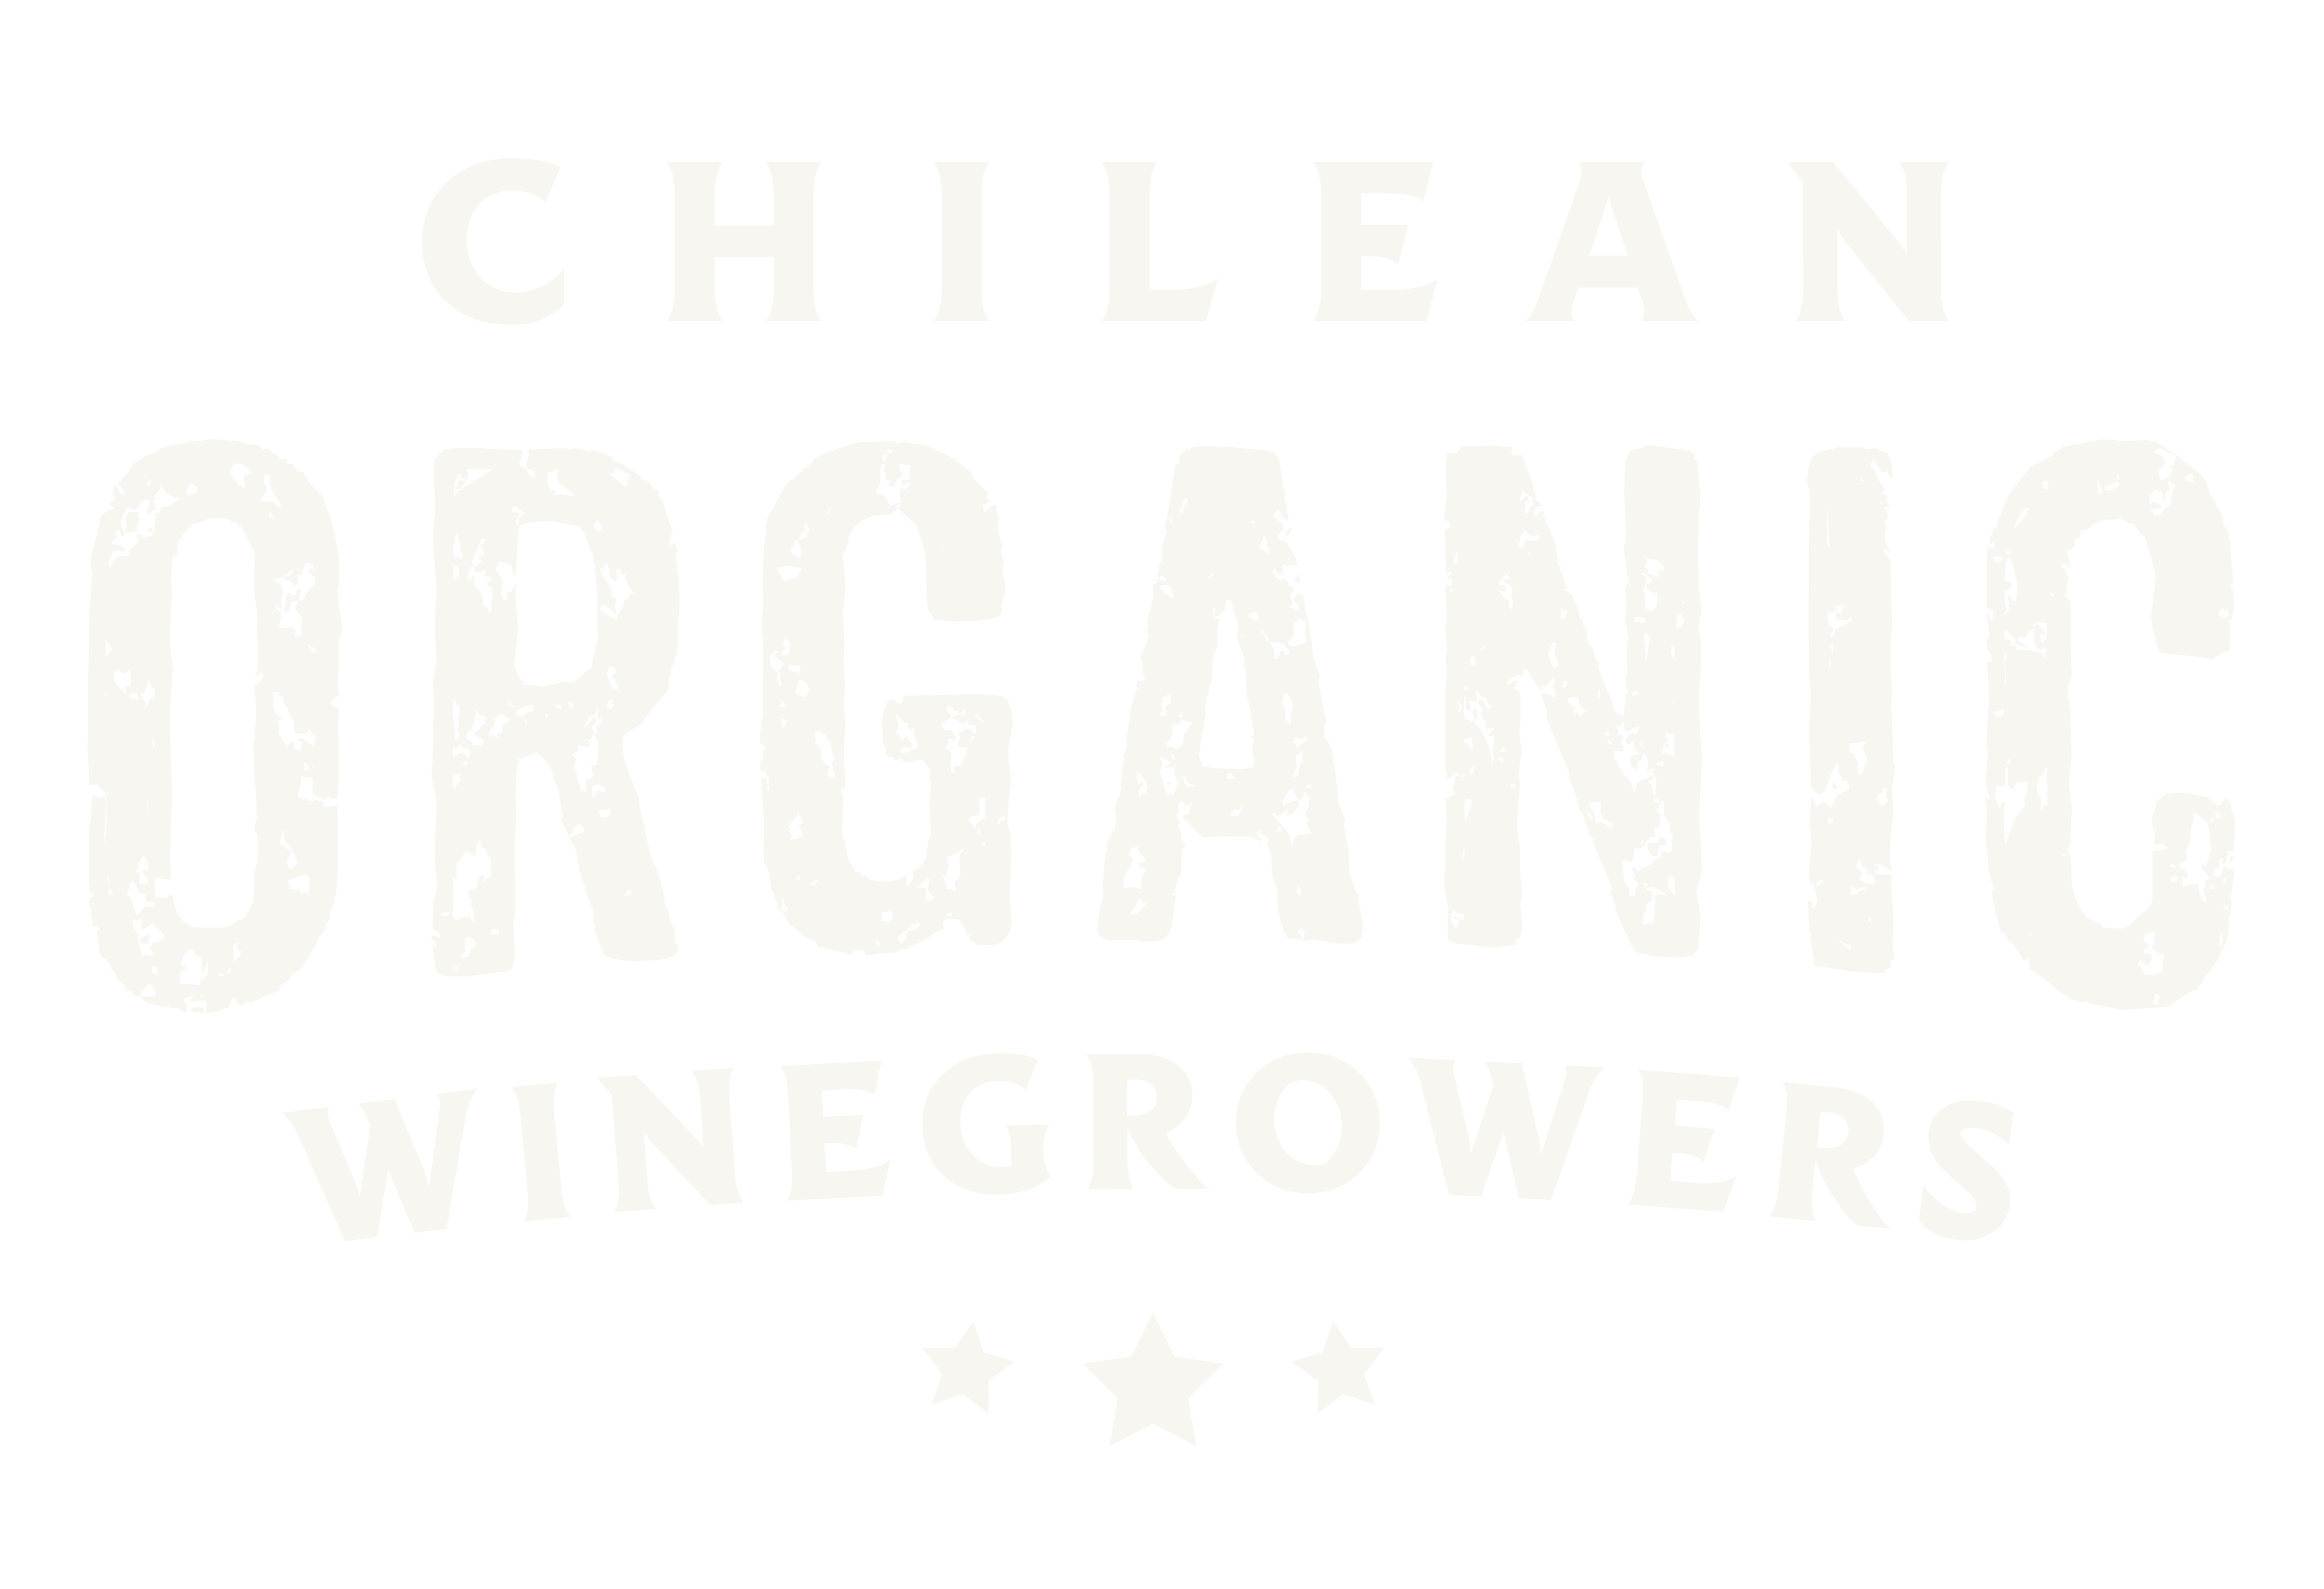 Chilean Organic Winegrowers